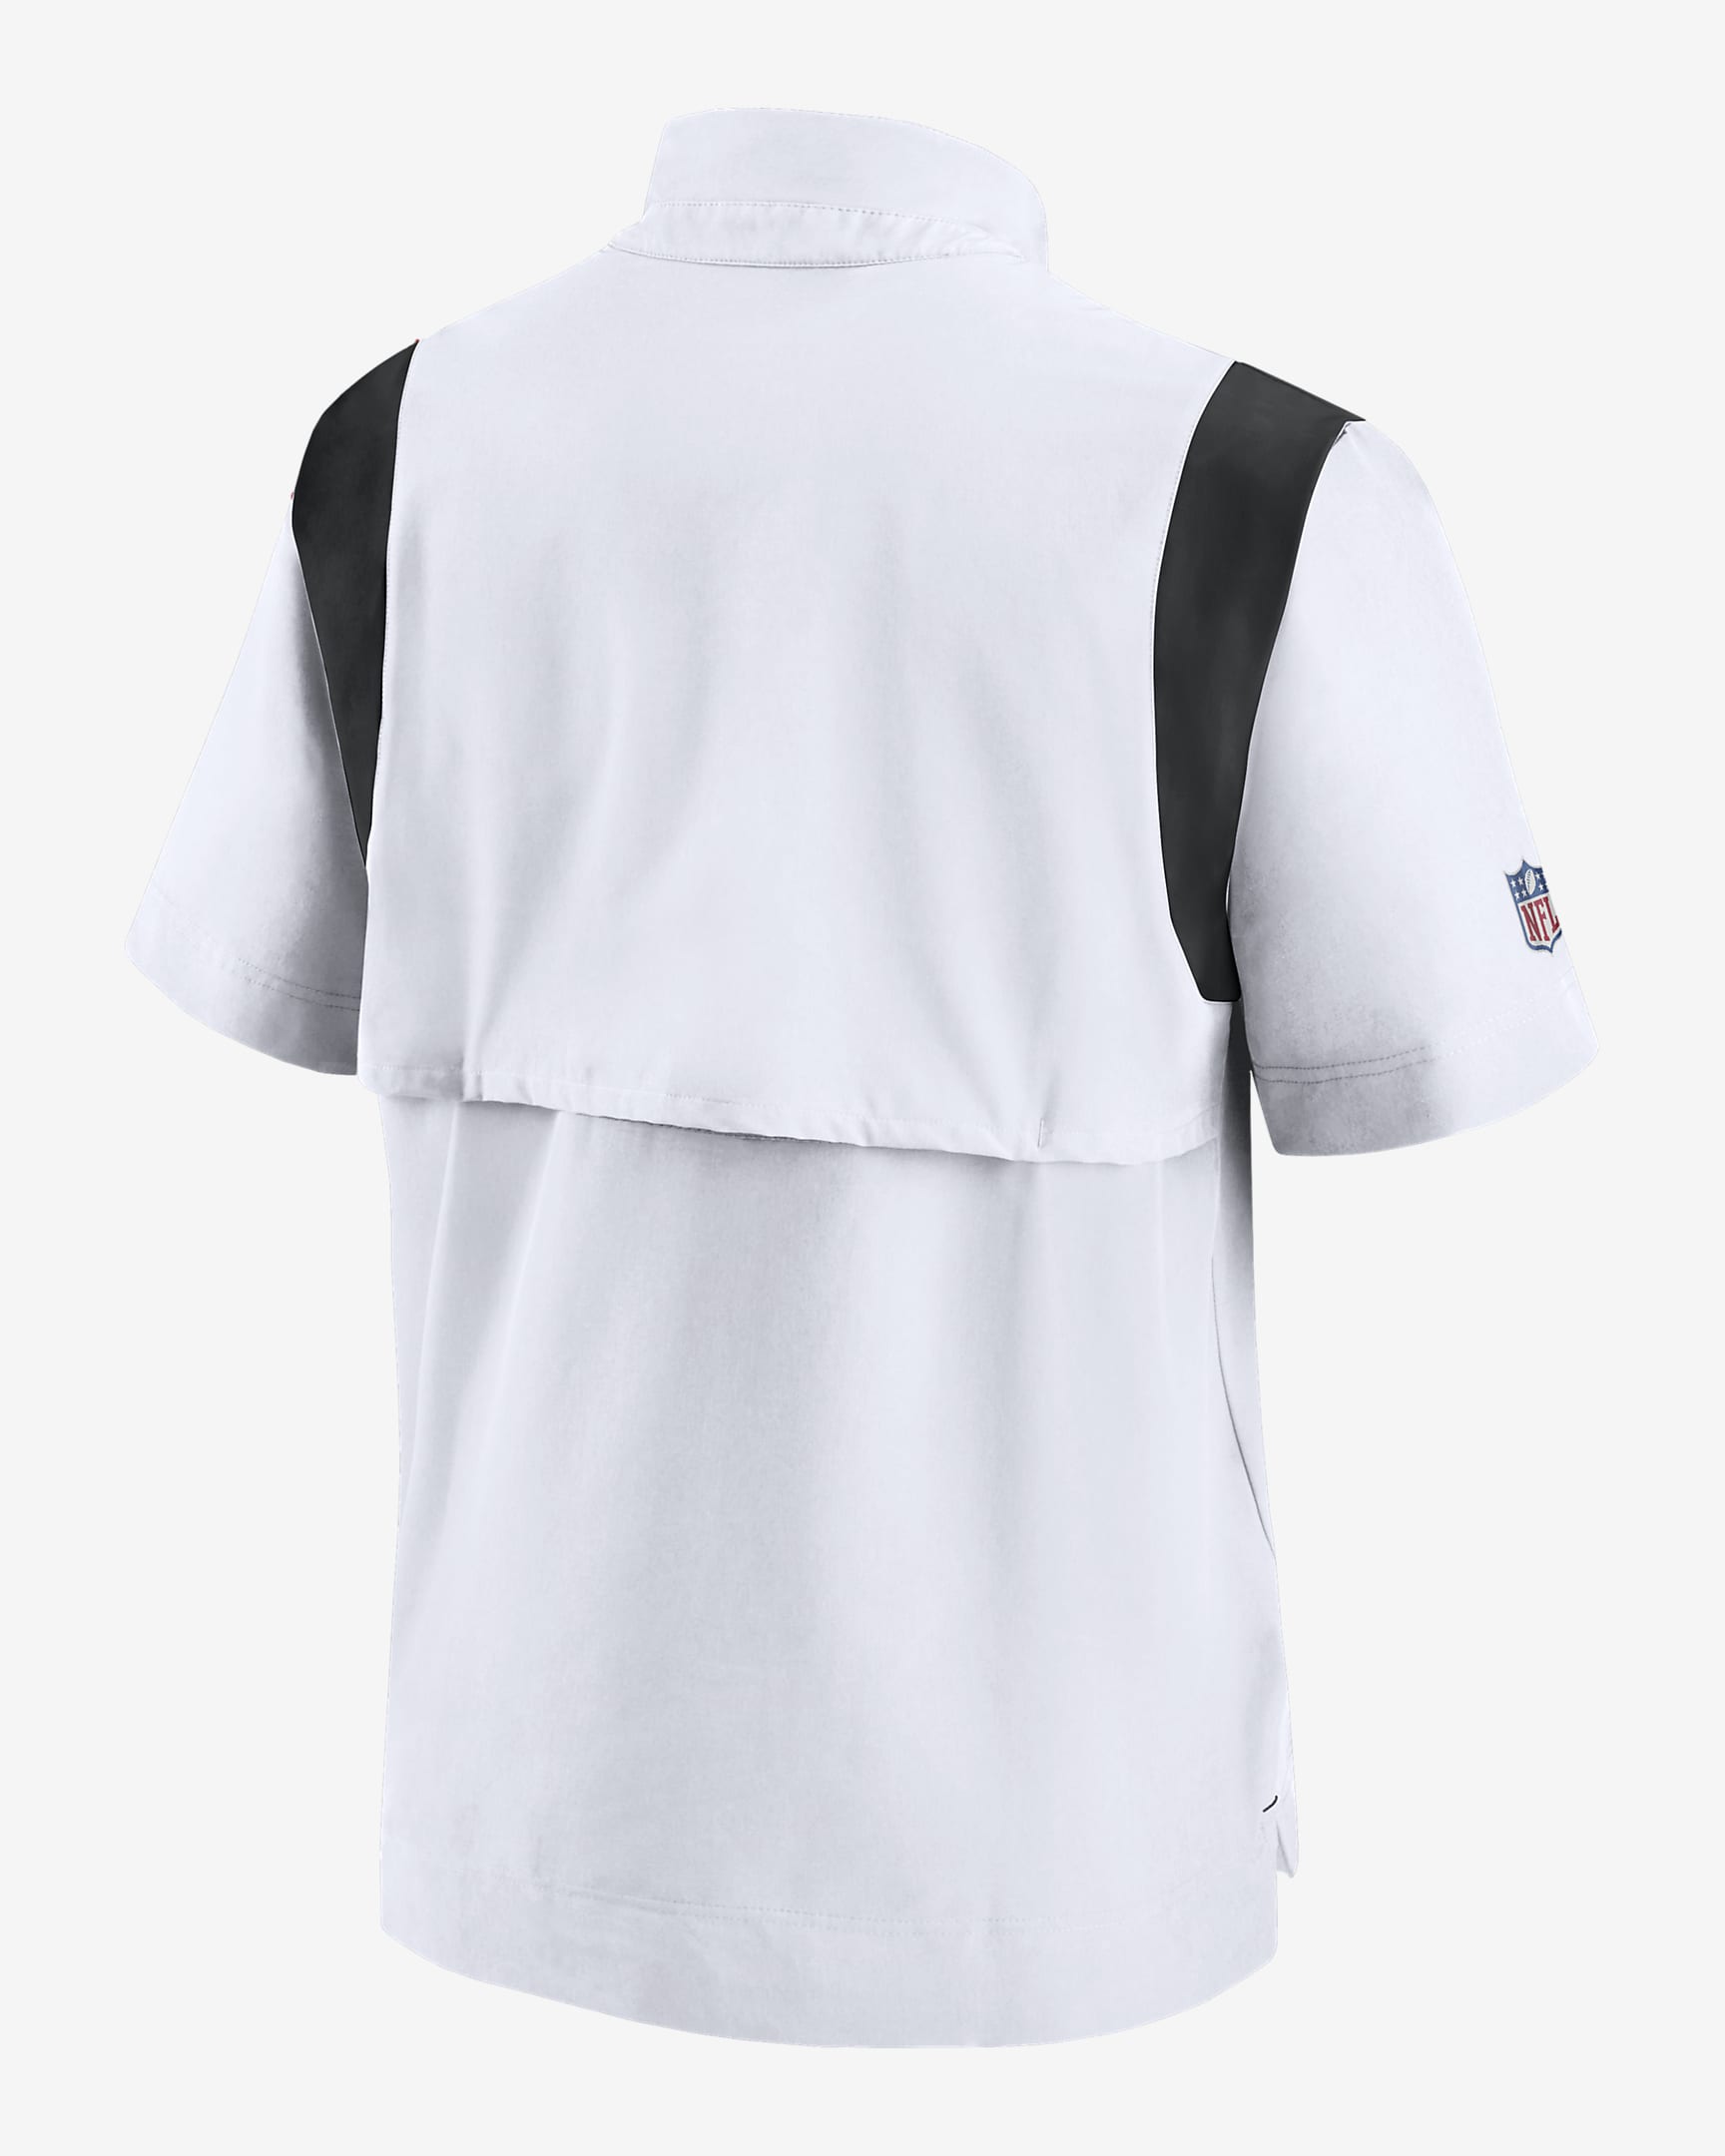 Nike Sideline Coach Lockup (NFL Las Vegas Raiders) Men's Short-Sleeve ...